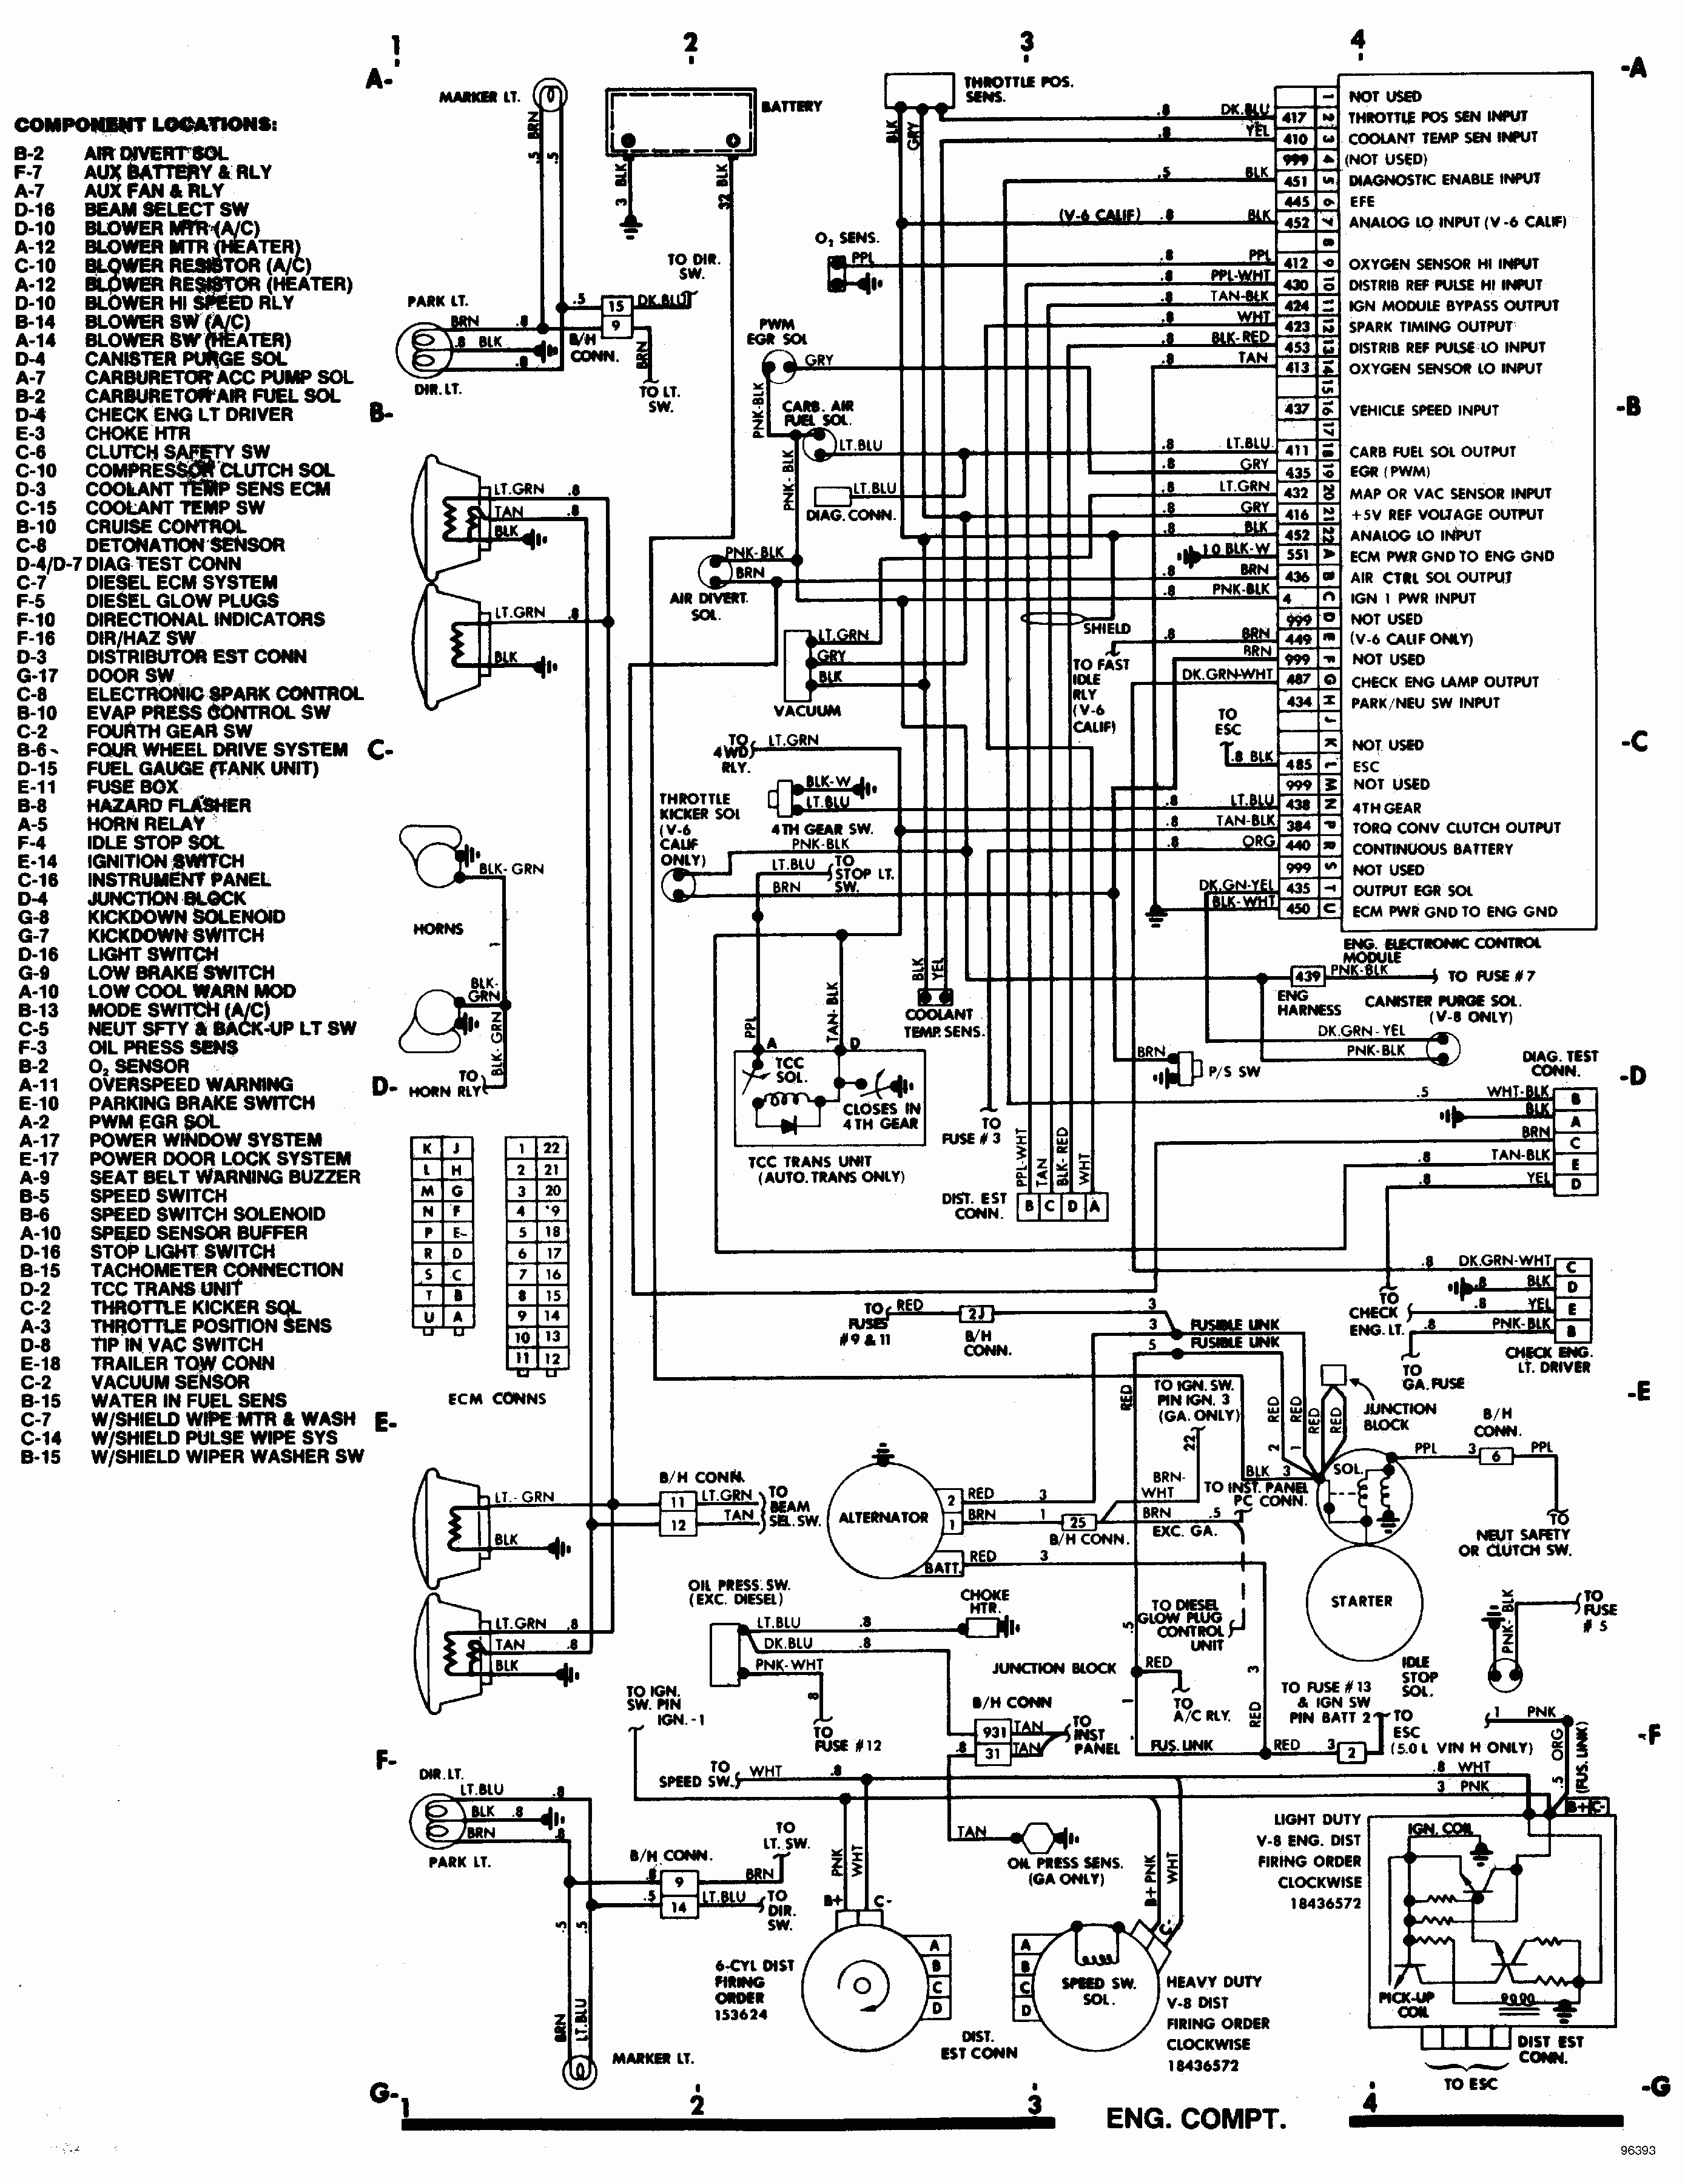 Diagram 1957 Chevy Wagon Wiring Diagram Full Version Hd Quality Wiring Diagram 1rlslog Acrimperi It